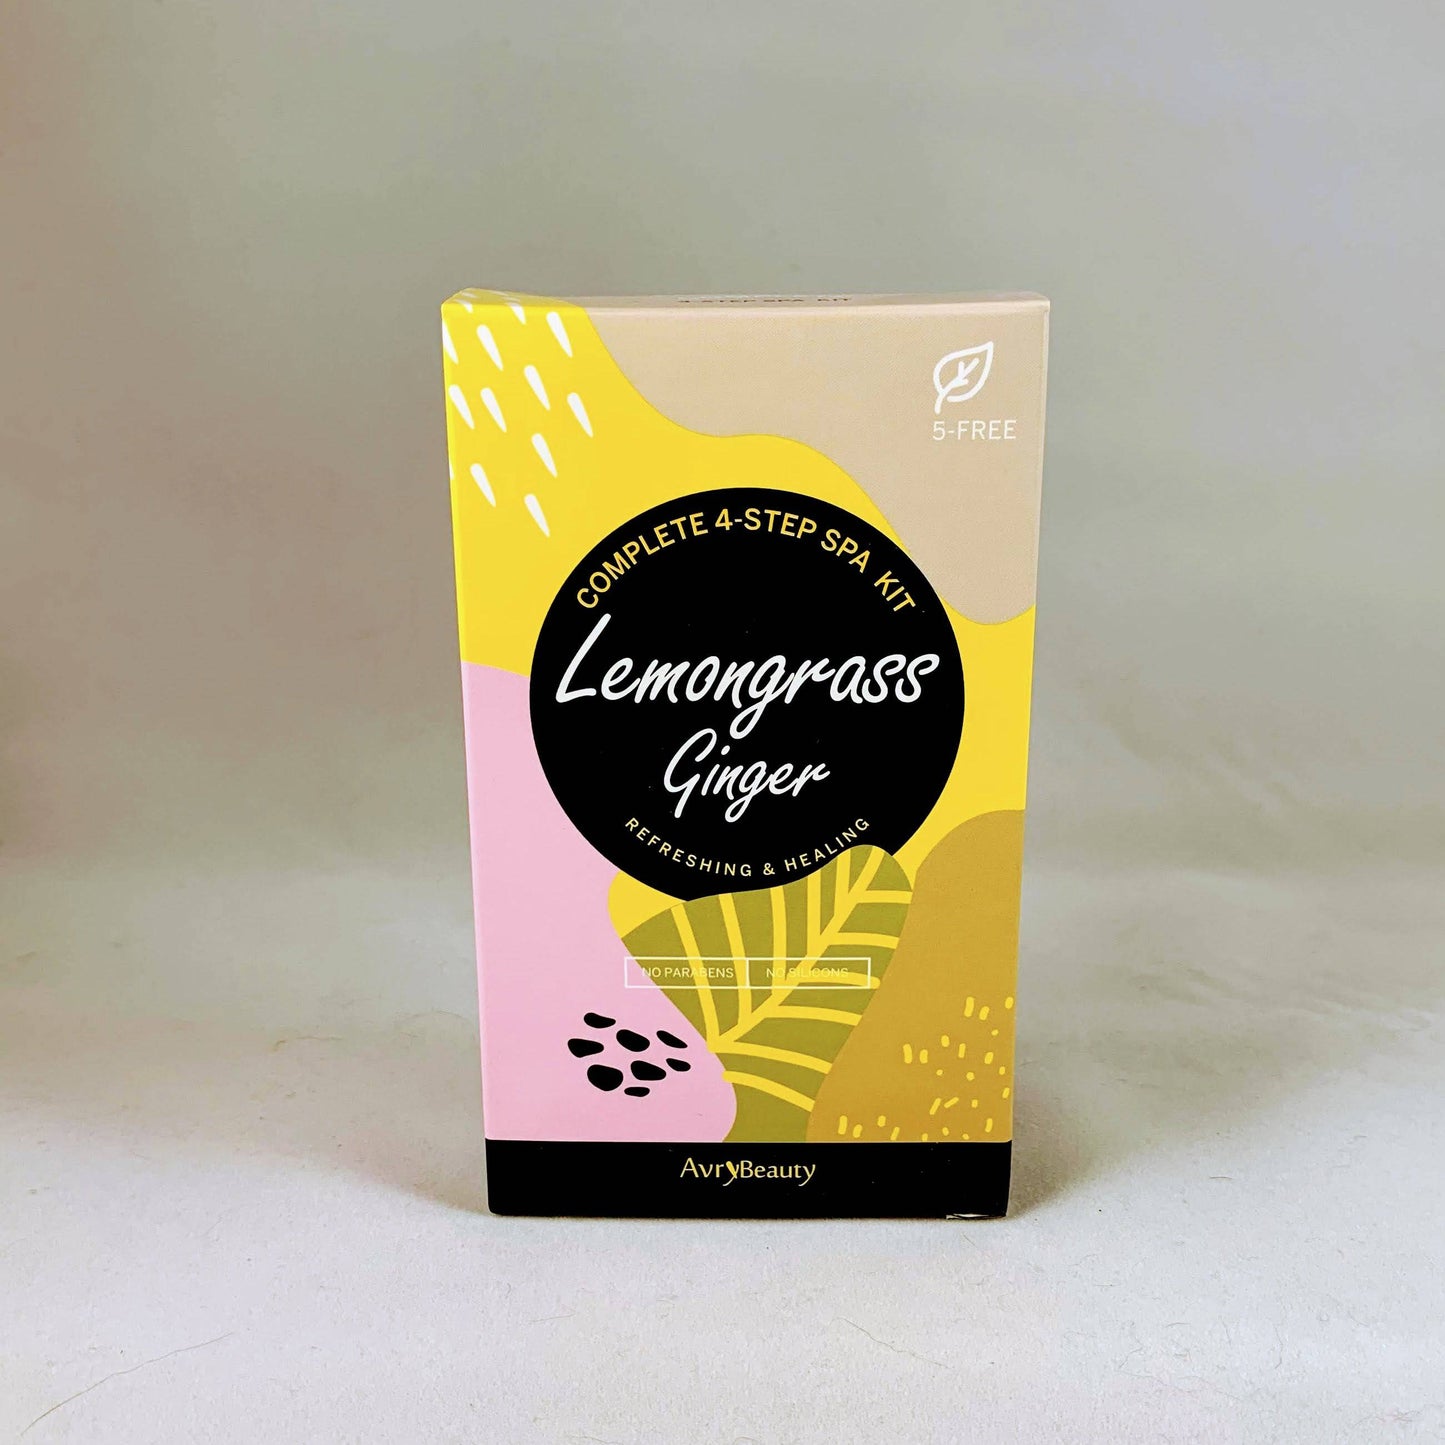 4-Step Lemongrass & Ginger Spa Kit | Avry Beauty - Bad Kitti Claws